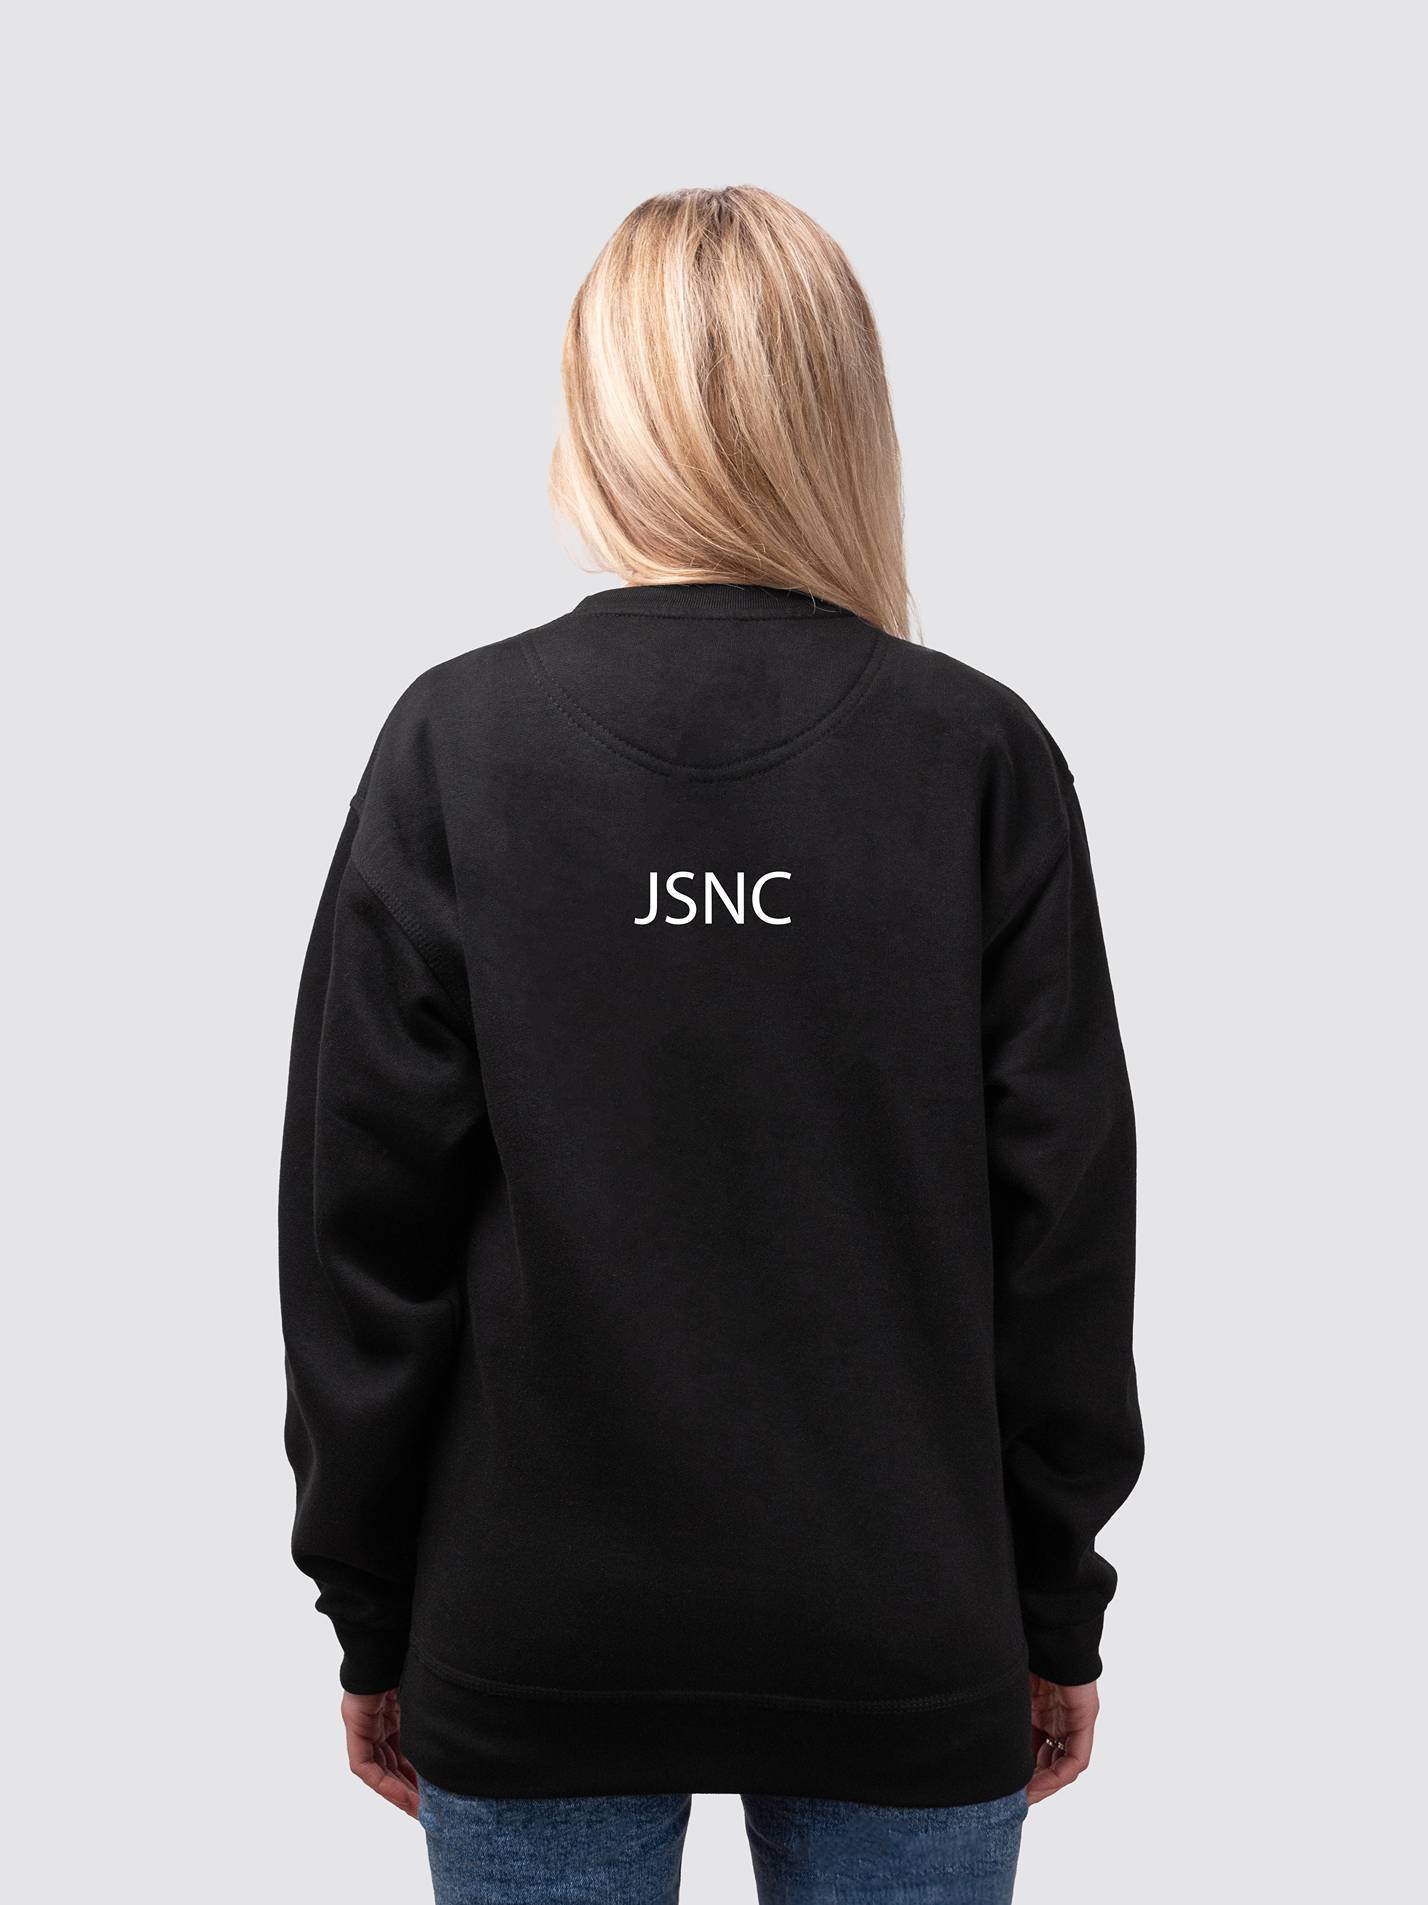 John Snow Netball Club Heavyweight Sweatshirt